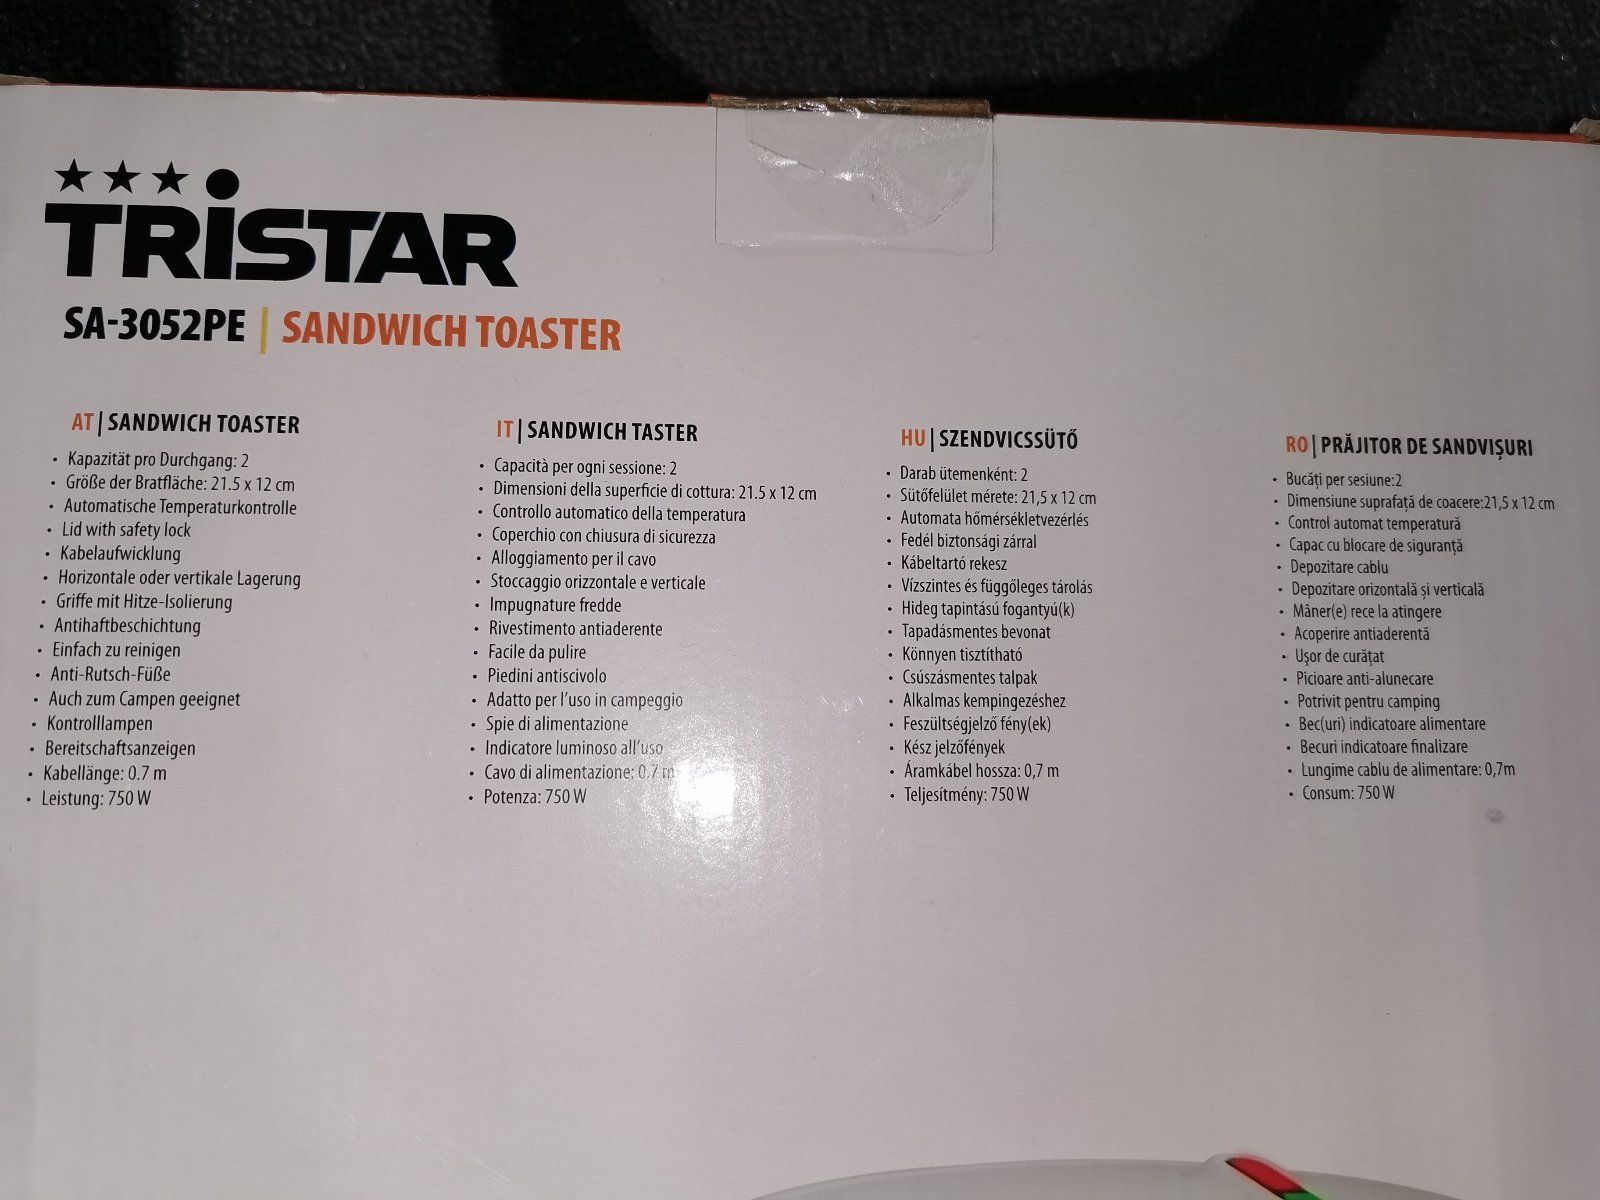 Tristar SA-3065 Sandwich Maker Test